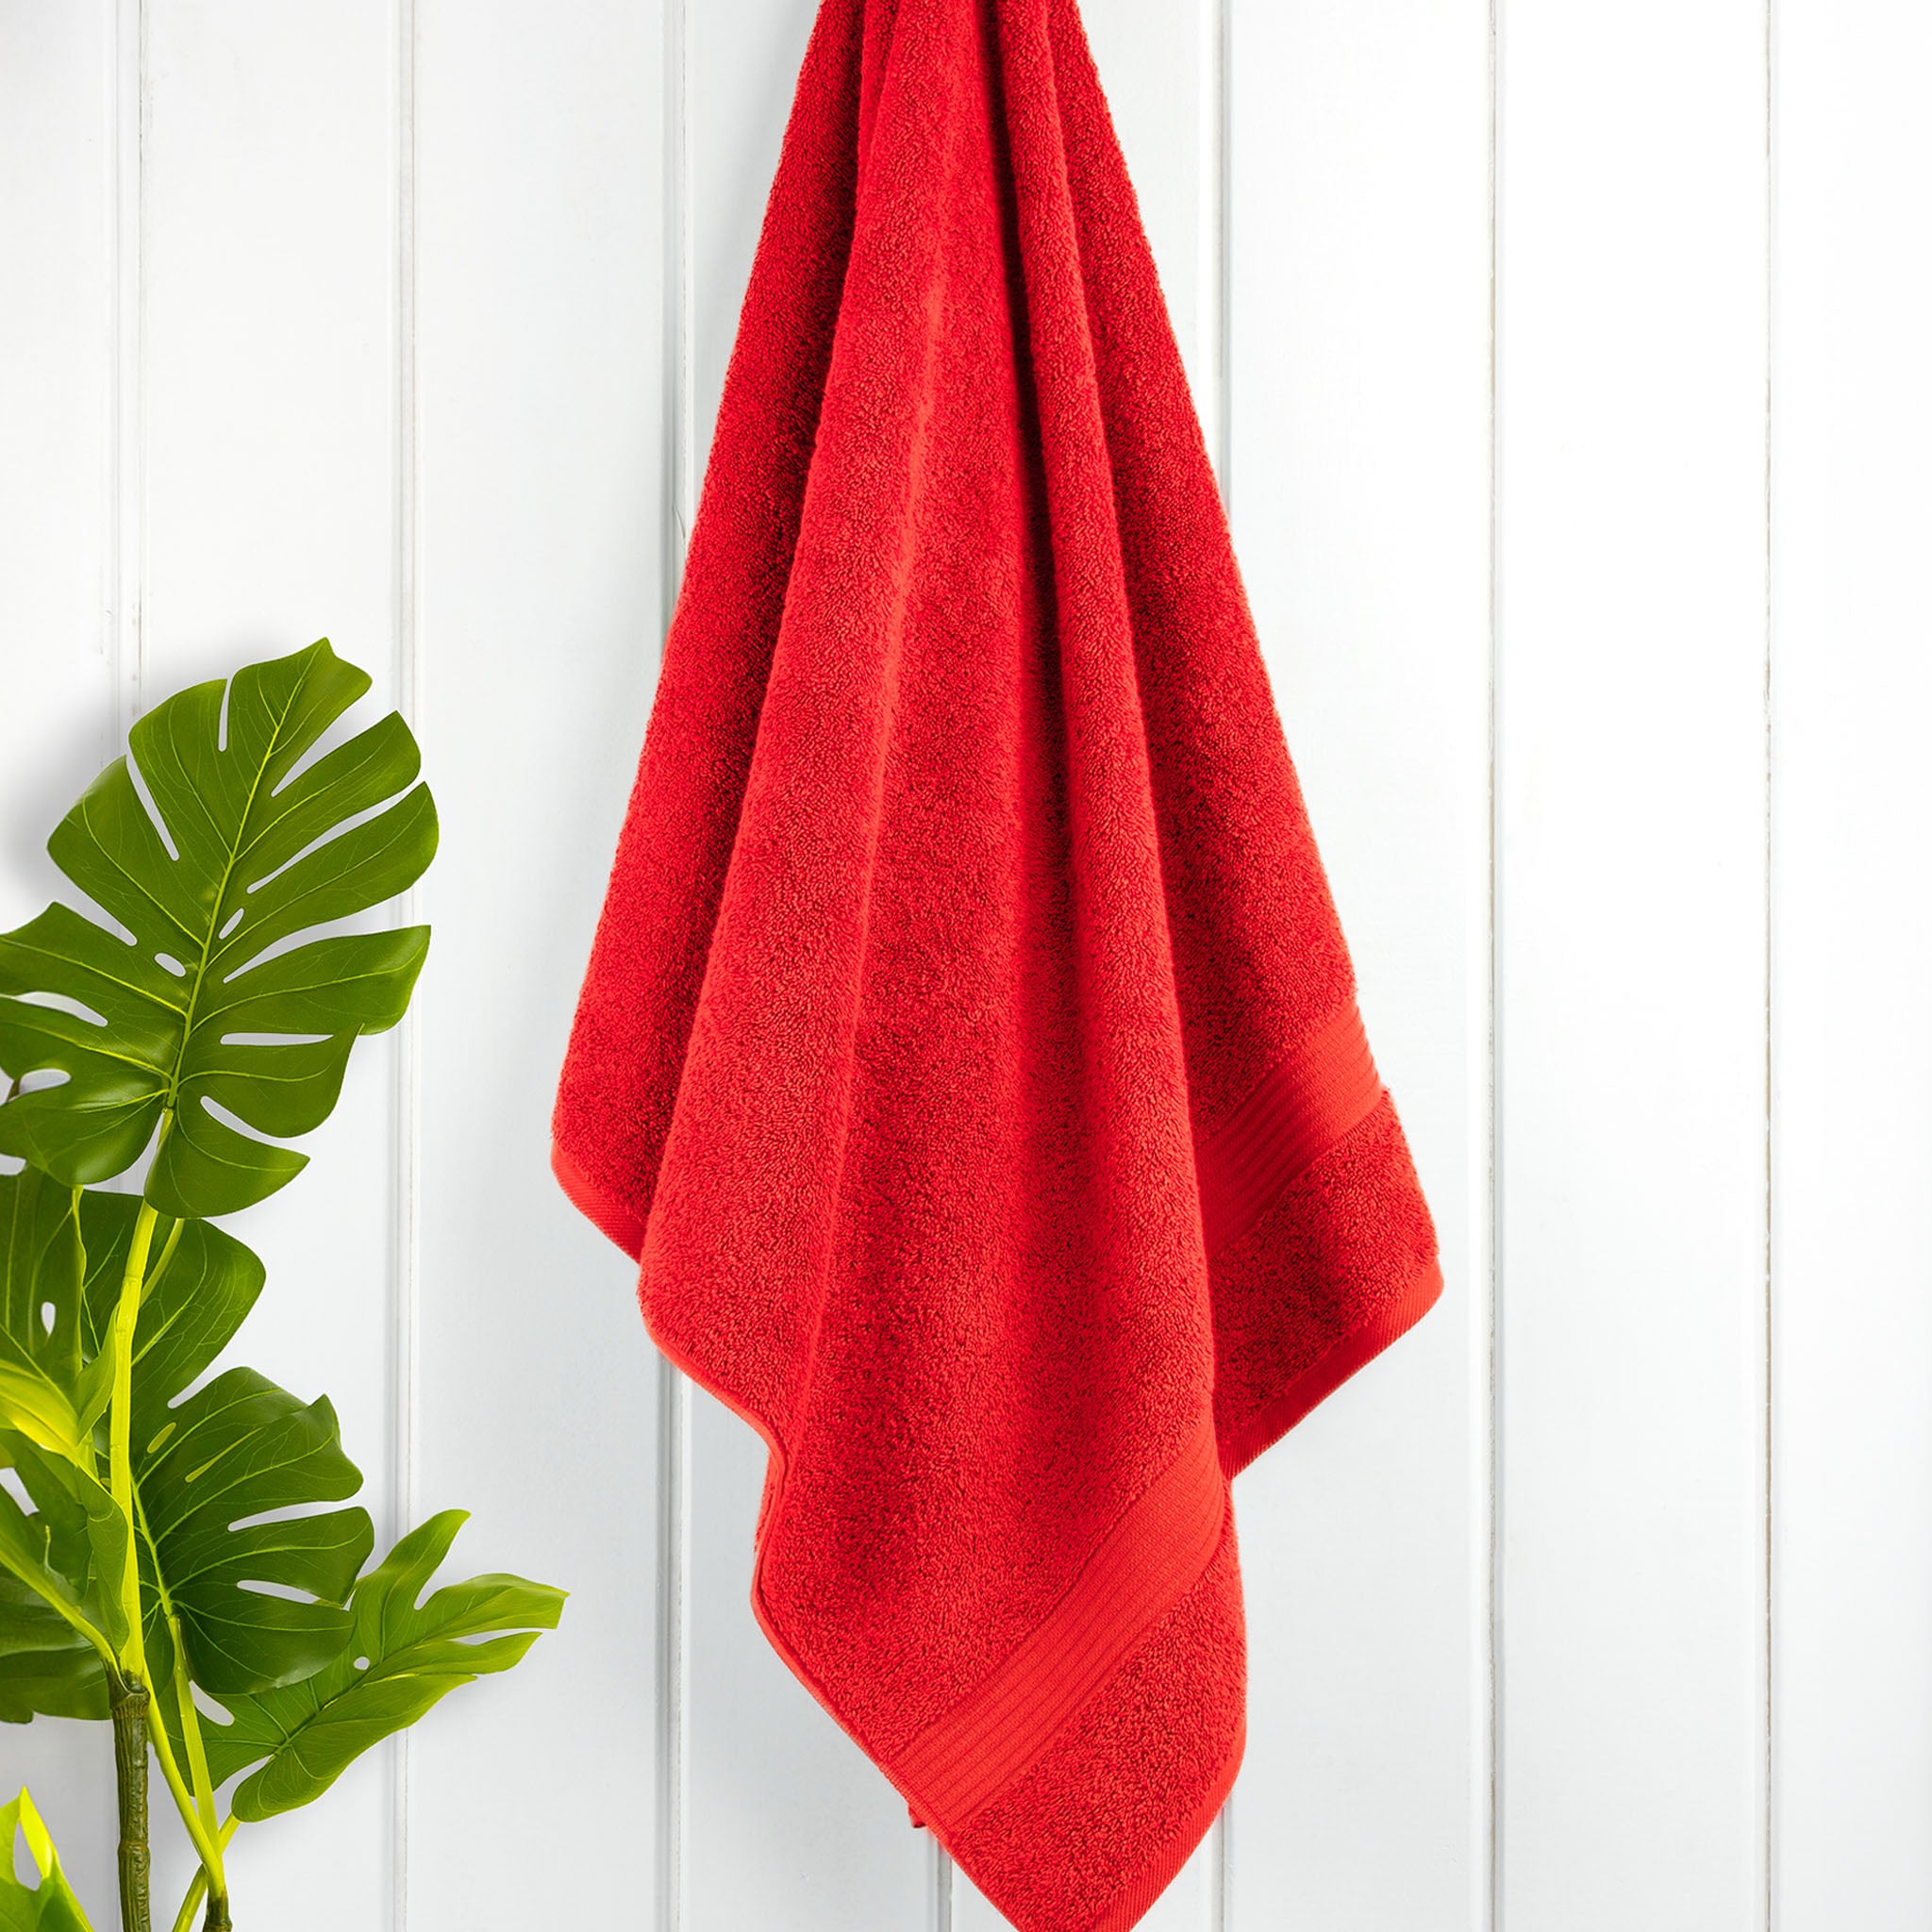 American Soft Linen Bekos 100% Cotton Turkish Towels, 4 Piece Bath Towel Set -red-02